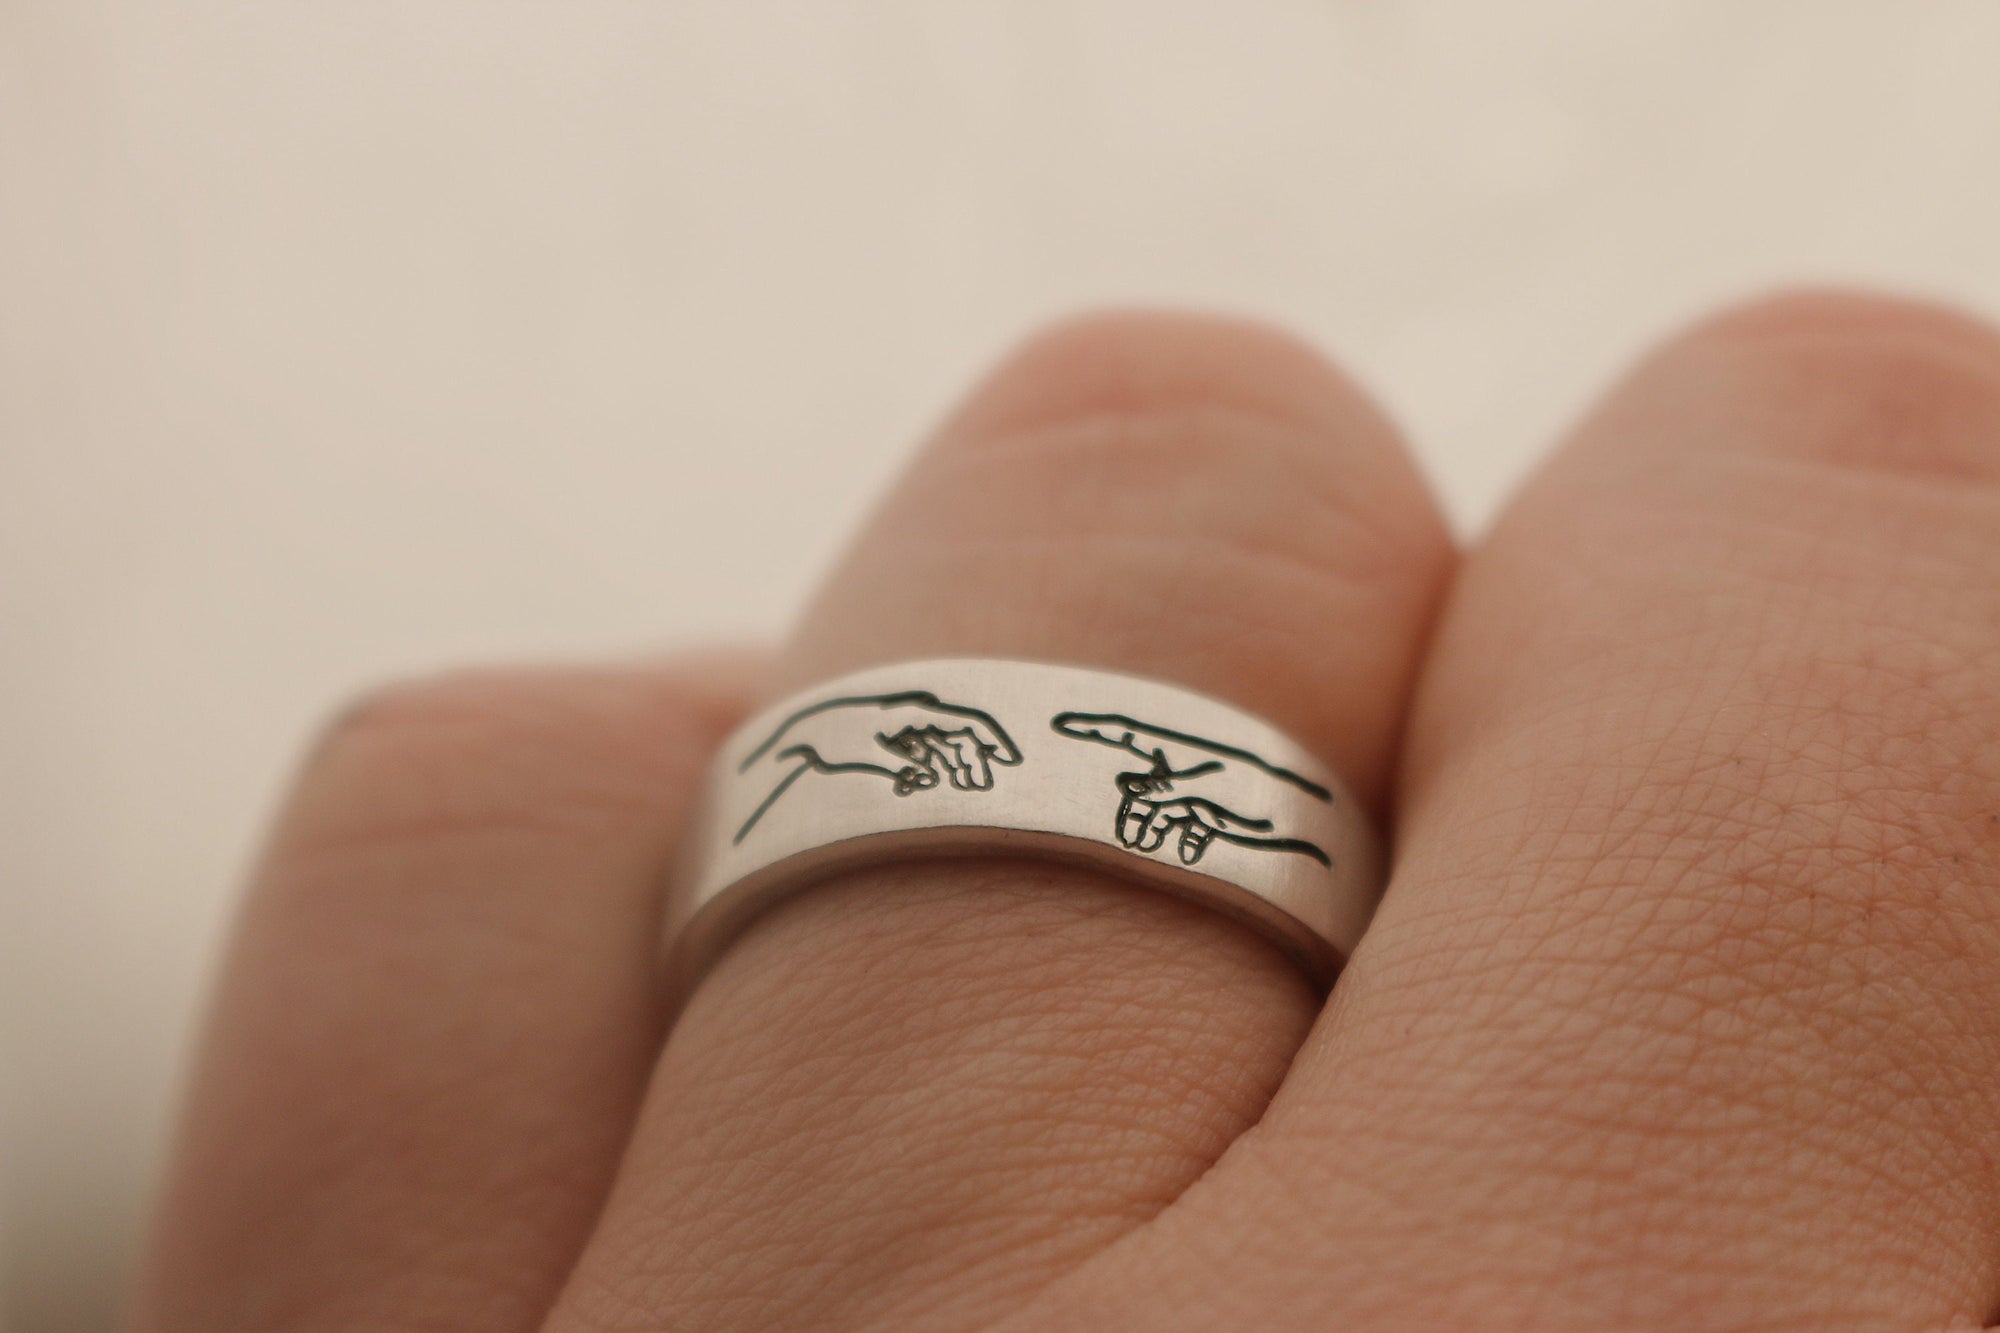 The Creation of Adam Ring | Michaelangelo Hands Jewelry | Minimalist Renaissance Ring | Best Friend Birthday Gift | Art Lover Ring